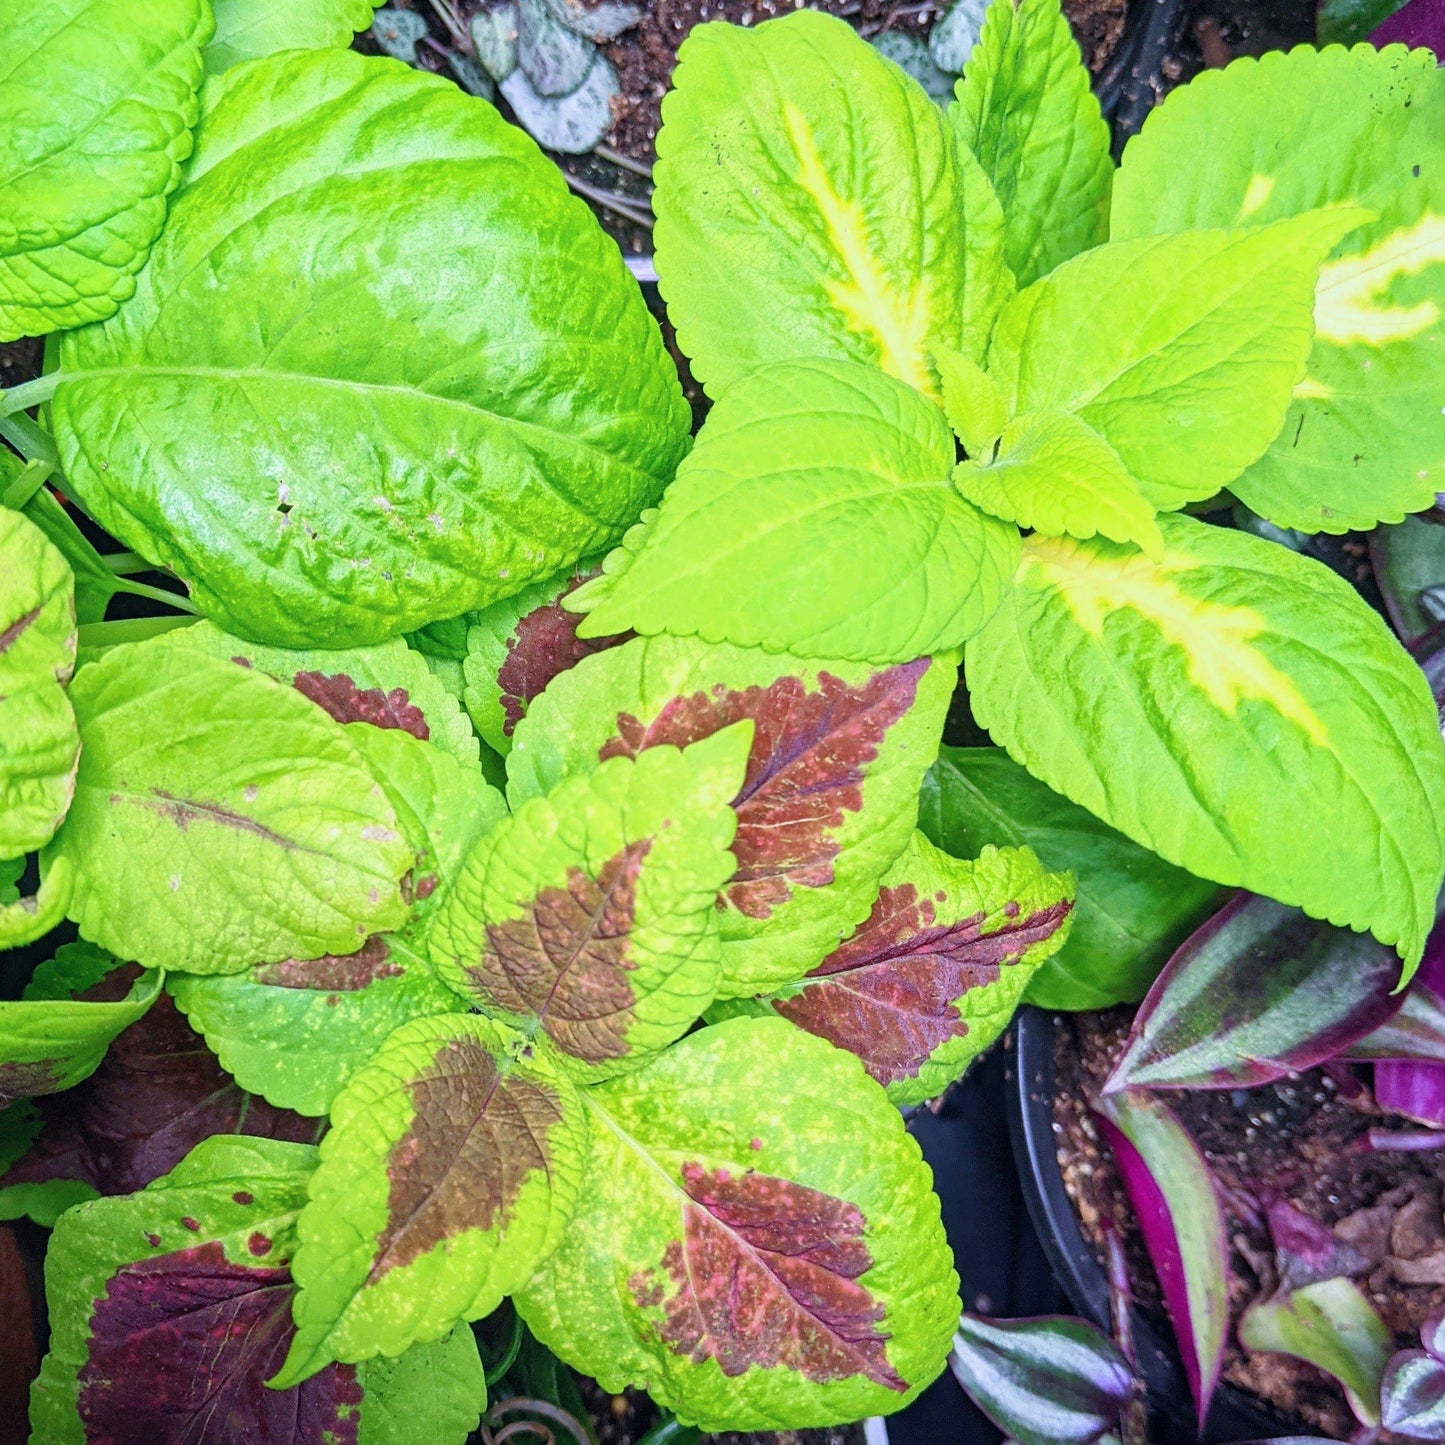 Plantflix - Grow a Rainbow Coleus Plant Seed Kit